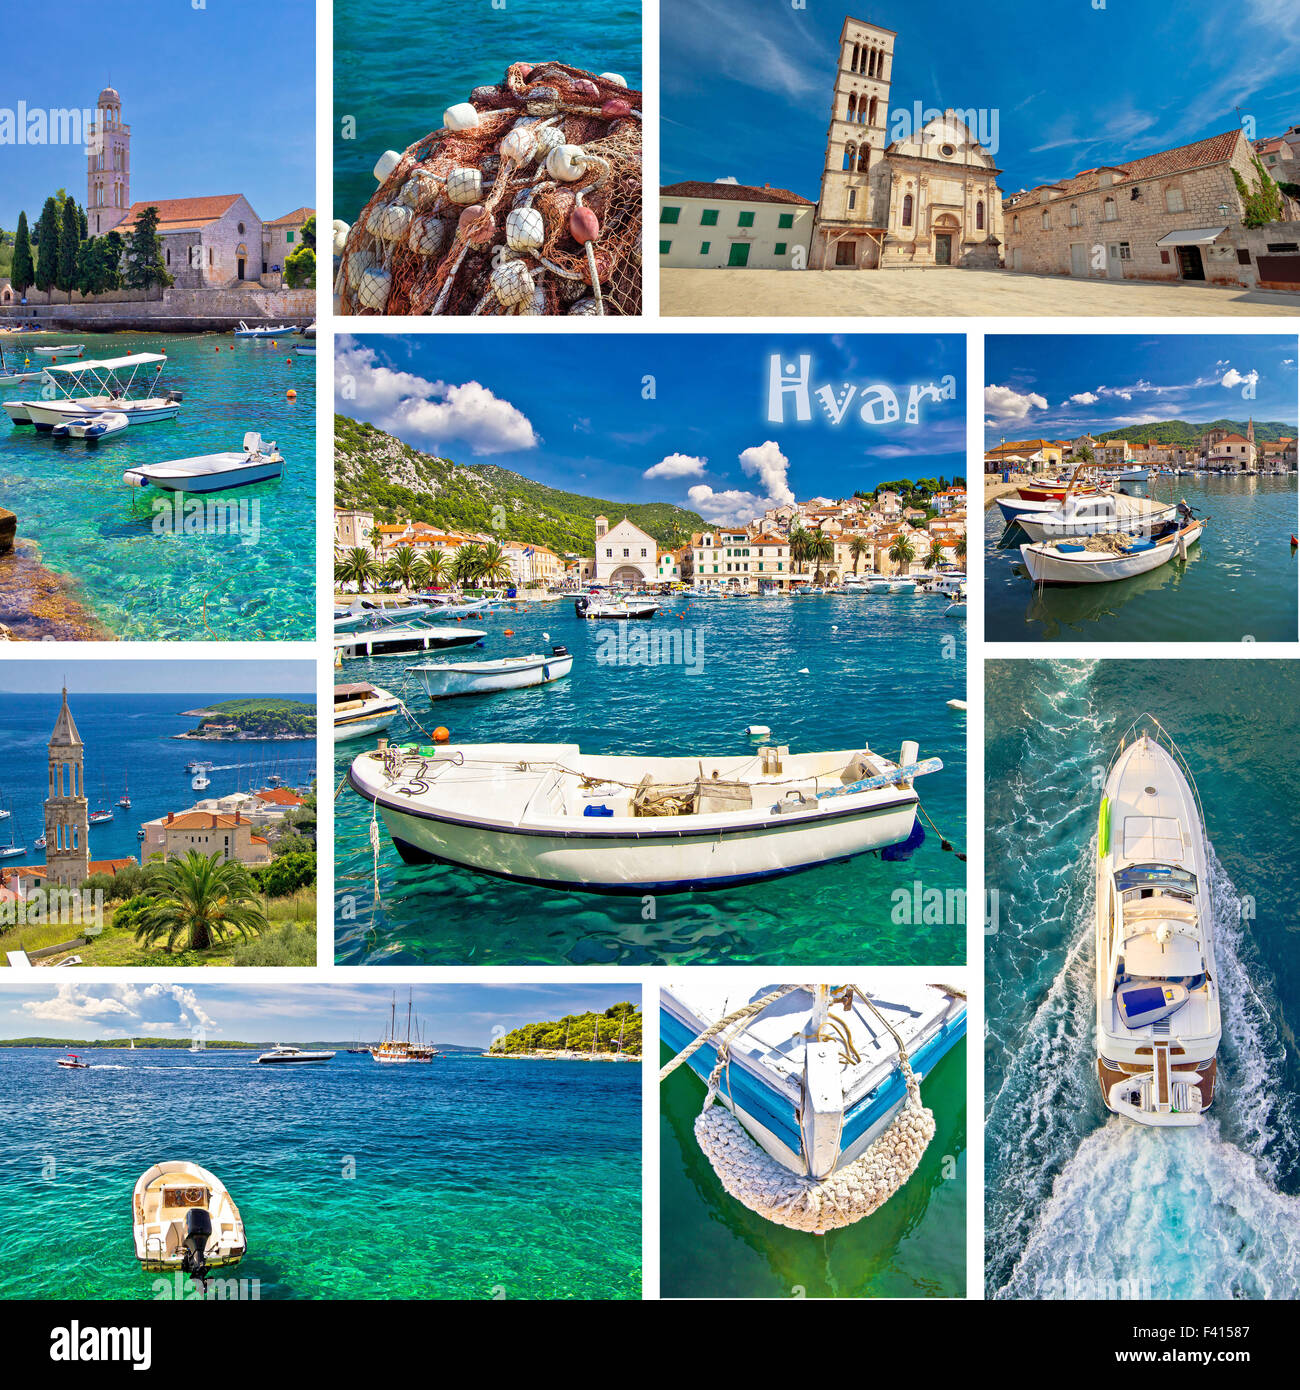 Hvar island tourist destination collage Stock Photo